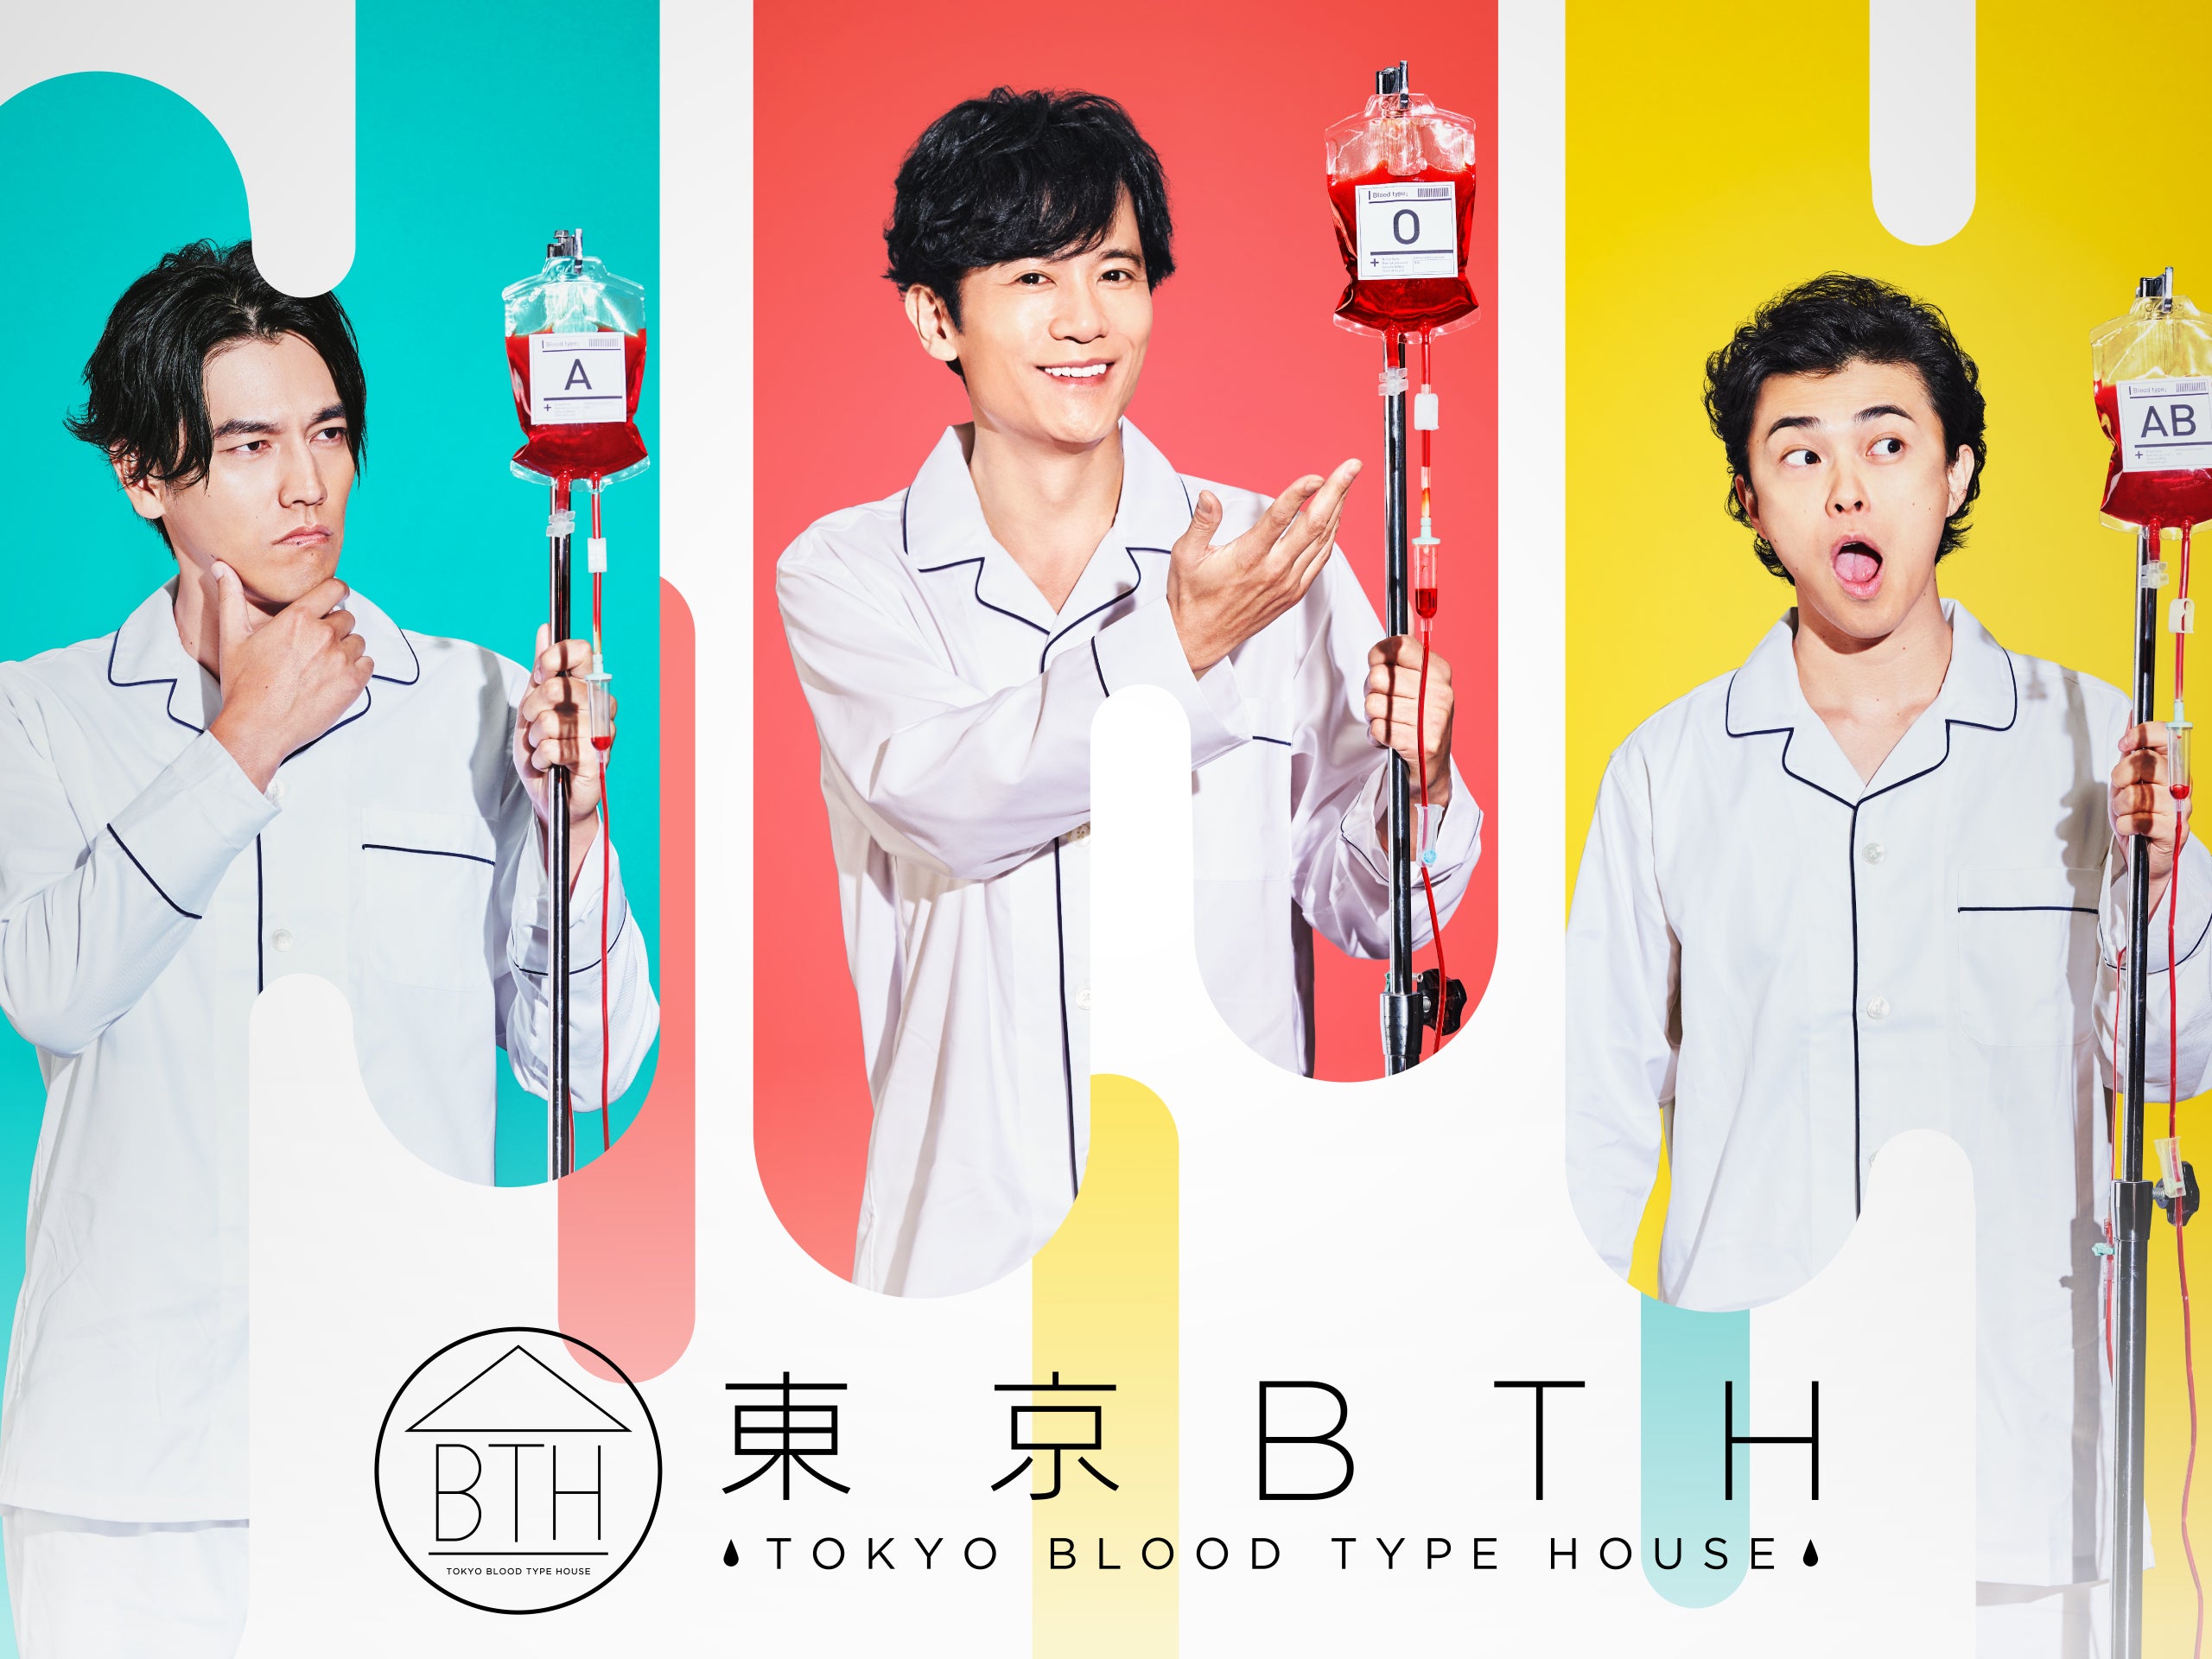 TV ratings for Tokyo Bth: Tokyo Blood Type House (東京BTH〜TOKYO BLOOD TYPE HOUSE〜) in Denmark. Amazon Prime Video TV series